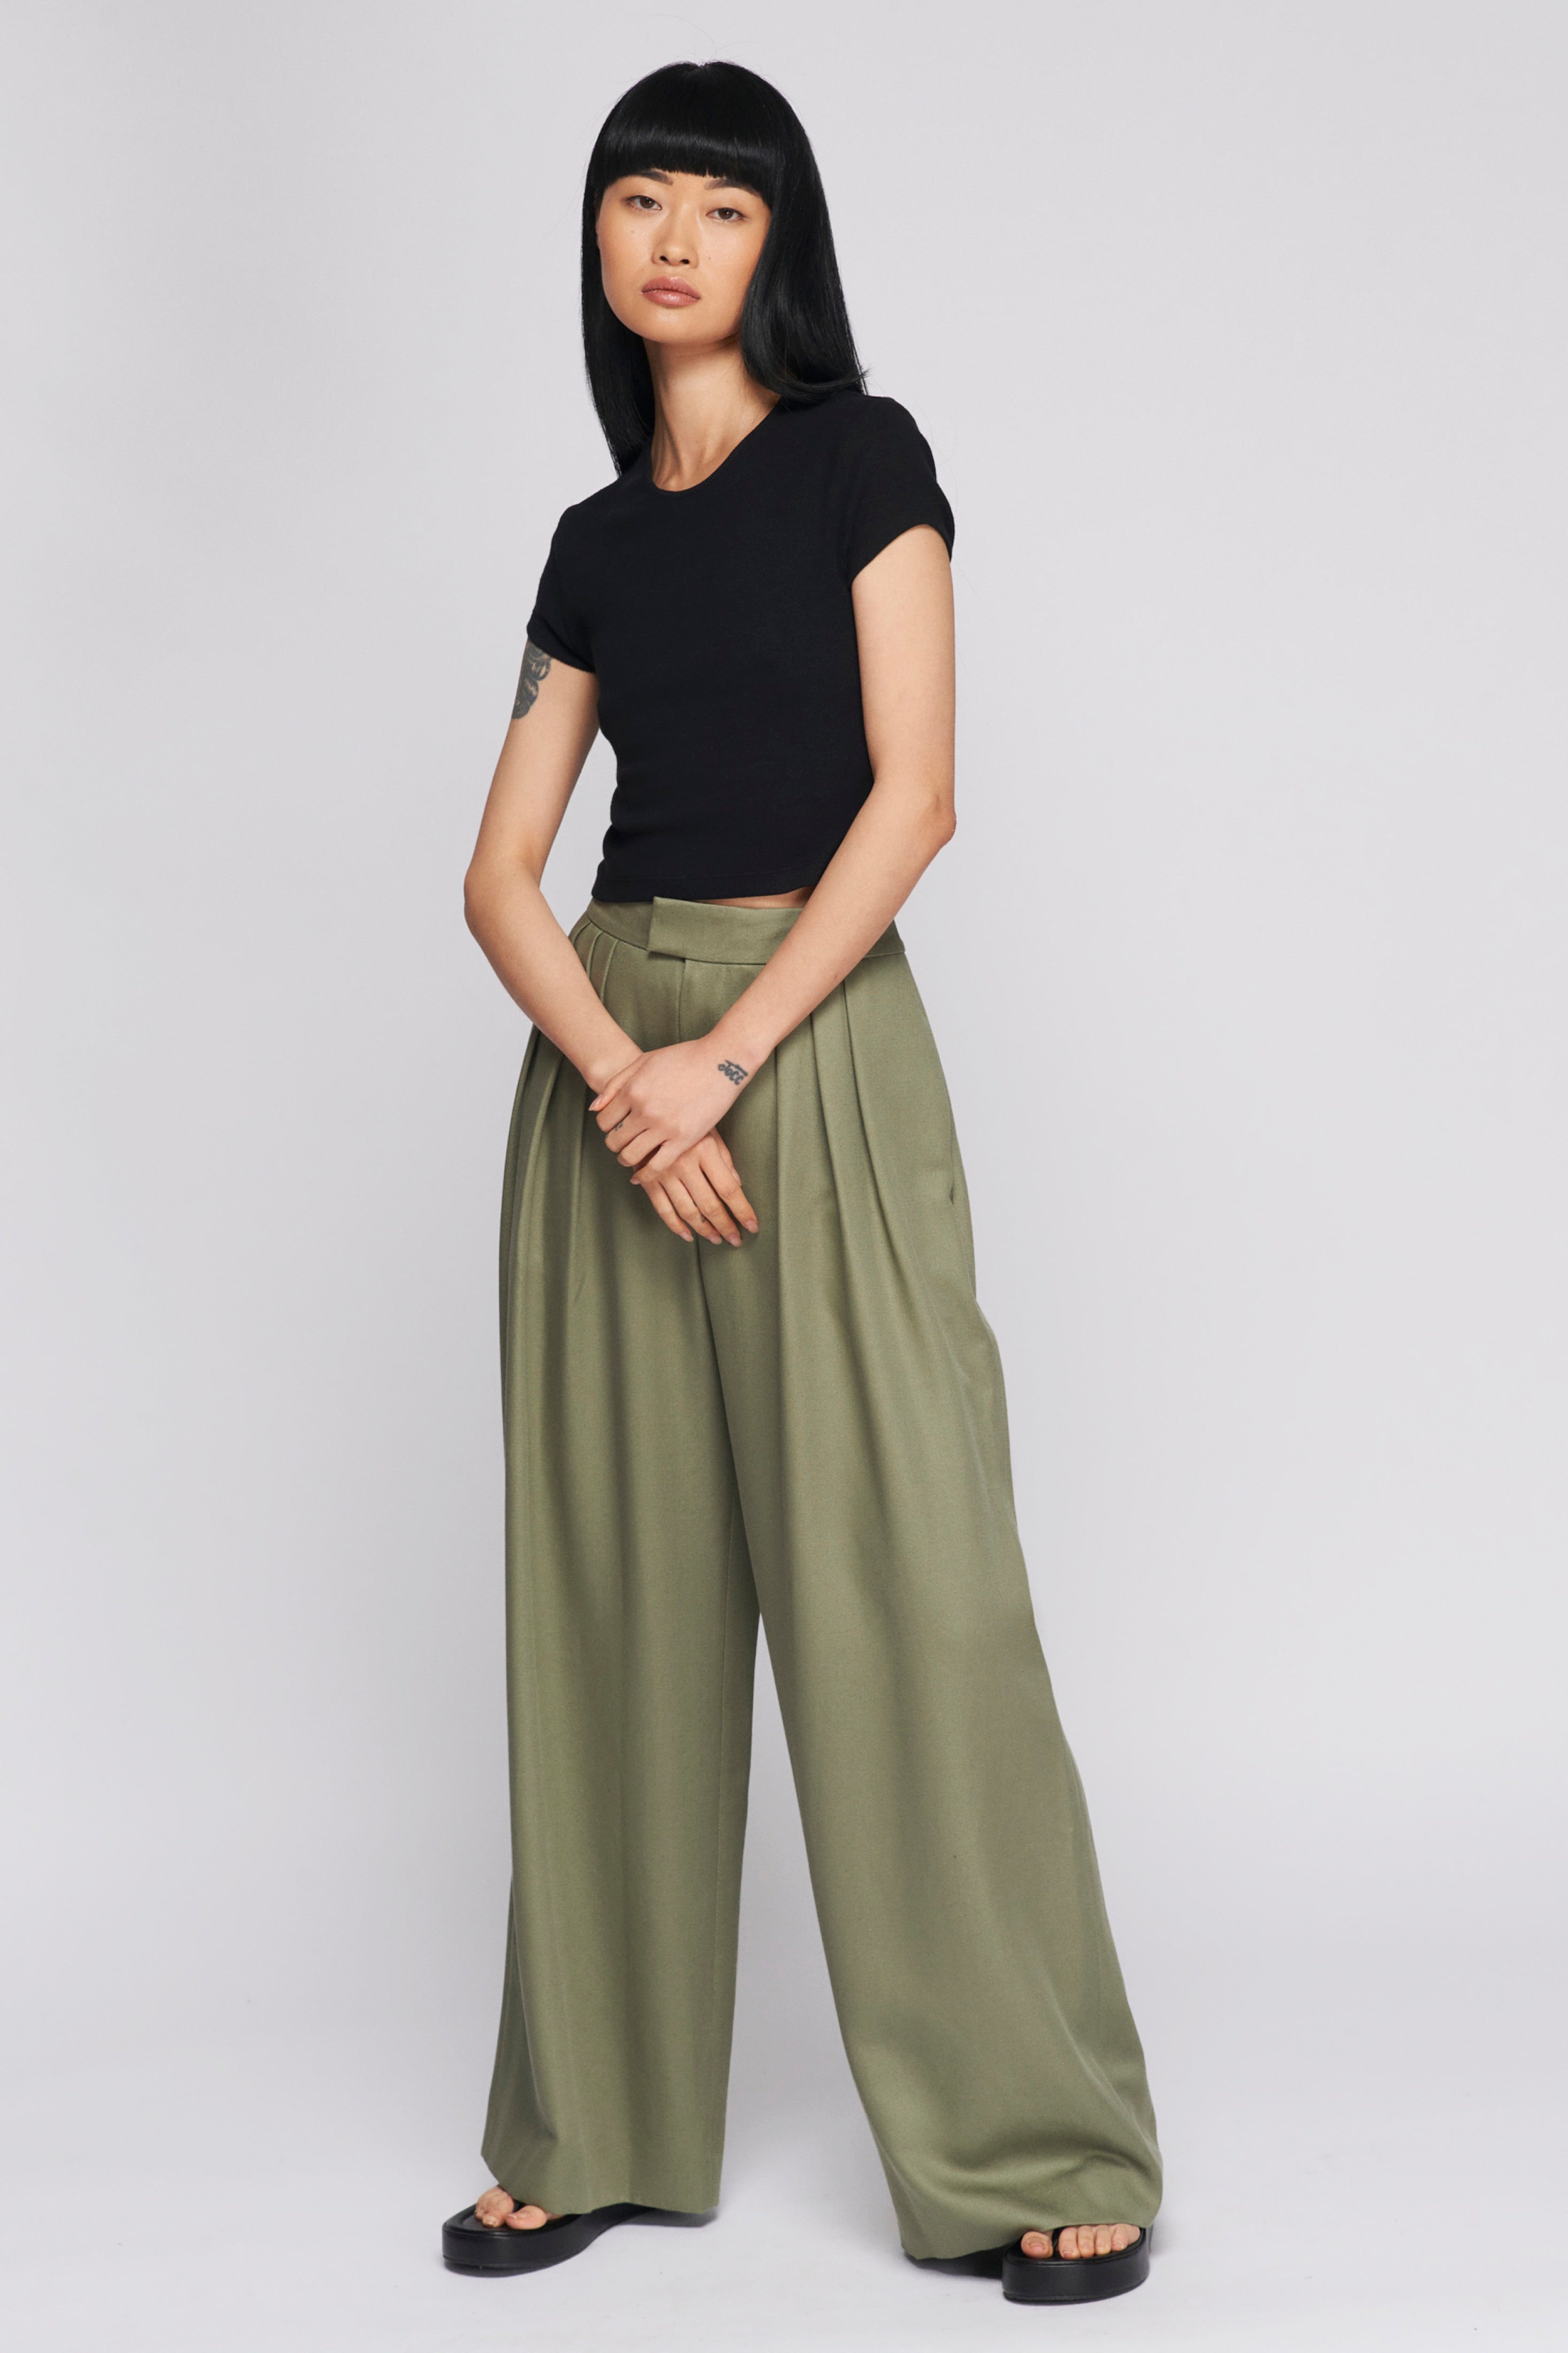 keusn cotton solid women loose casual color waist straight pocket midi  leggings trouser pants pants navy xxl 